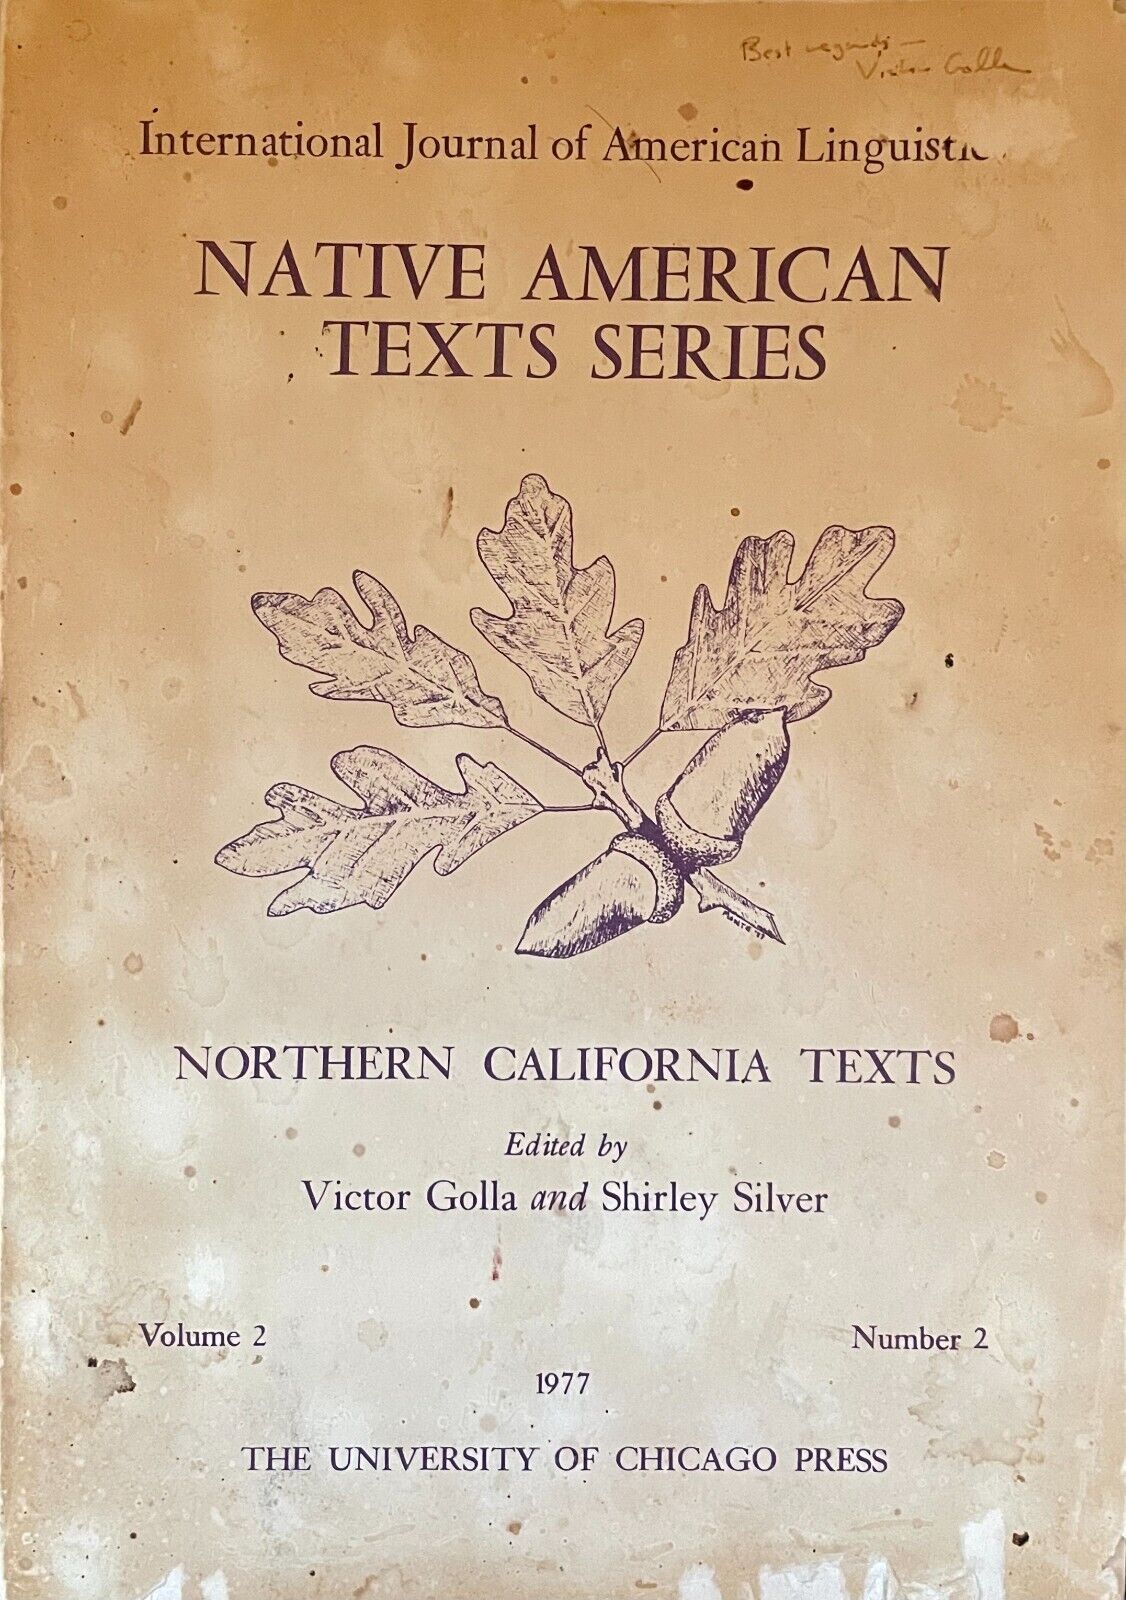 INTERNATIONAL JOURNAL OF AMERICAN LINGUISTIC-SCARCE-1977-NATIVE AMERICAN BOOK